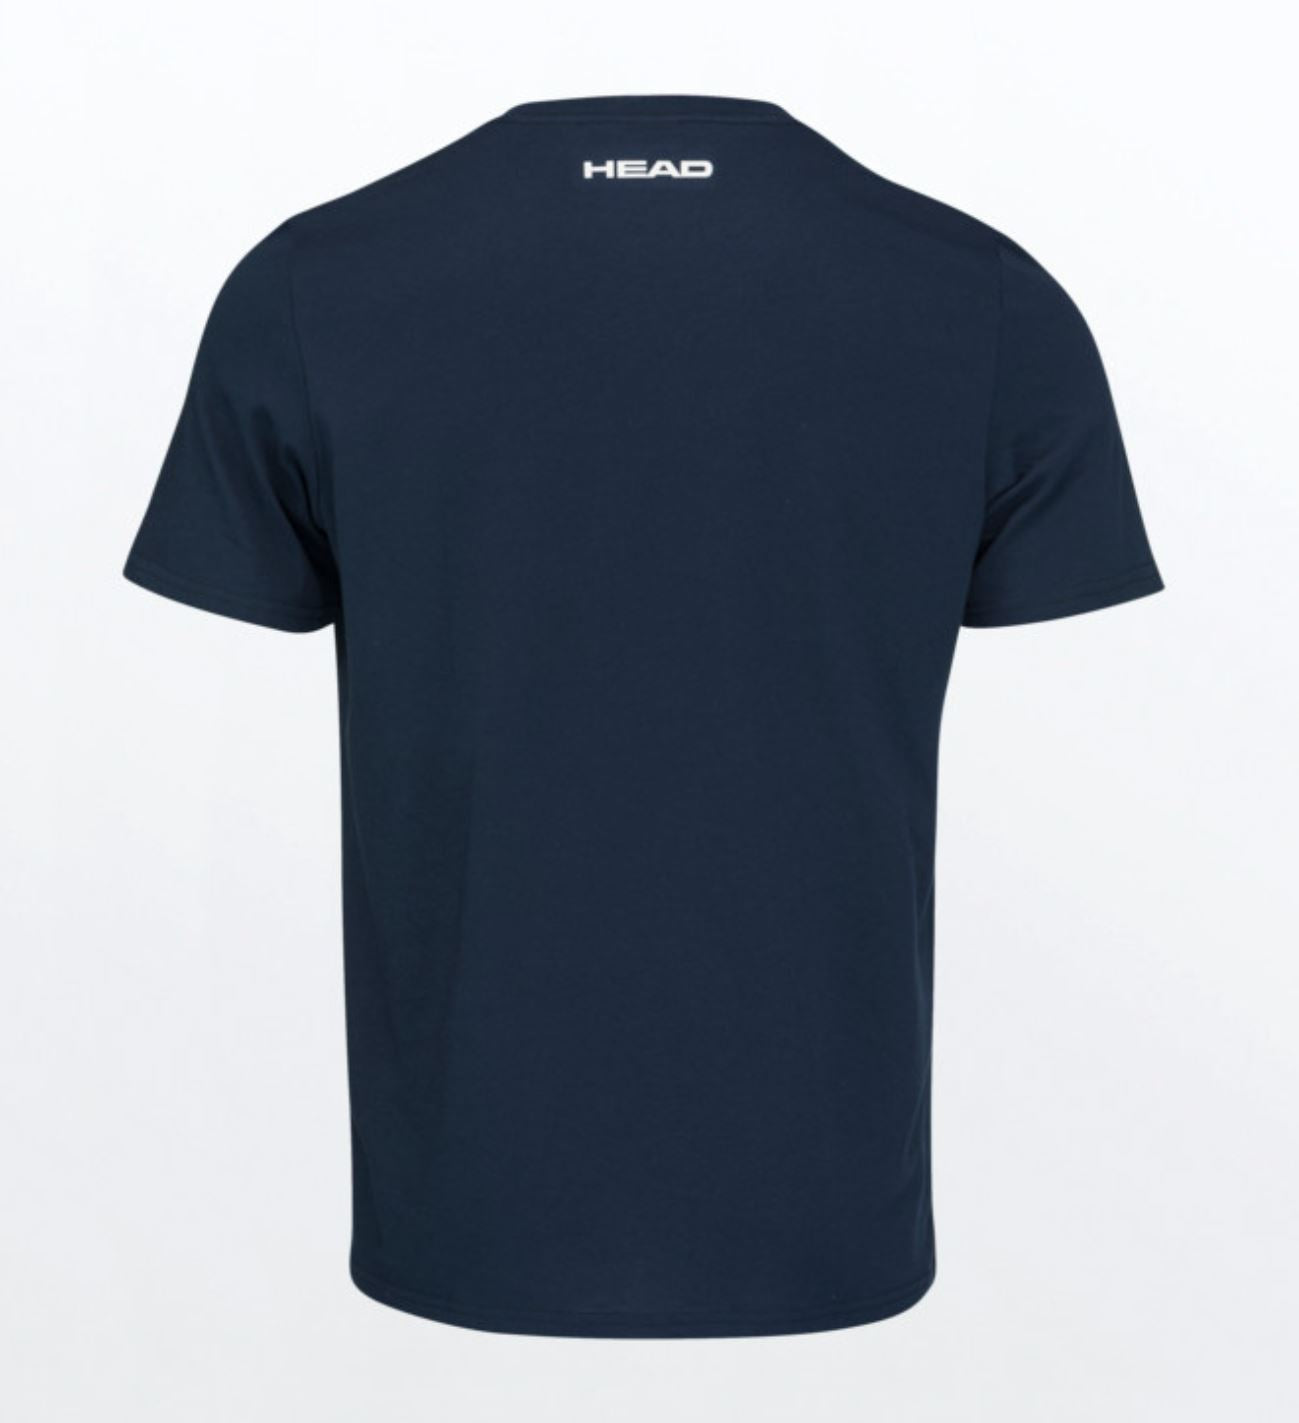 Head T-shirt (Blue)